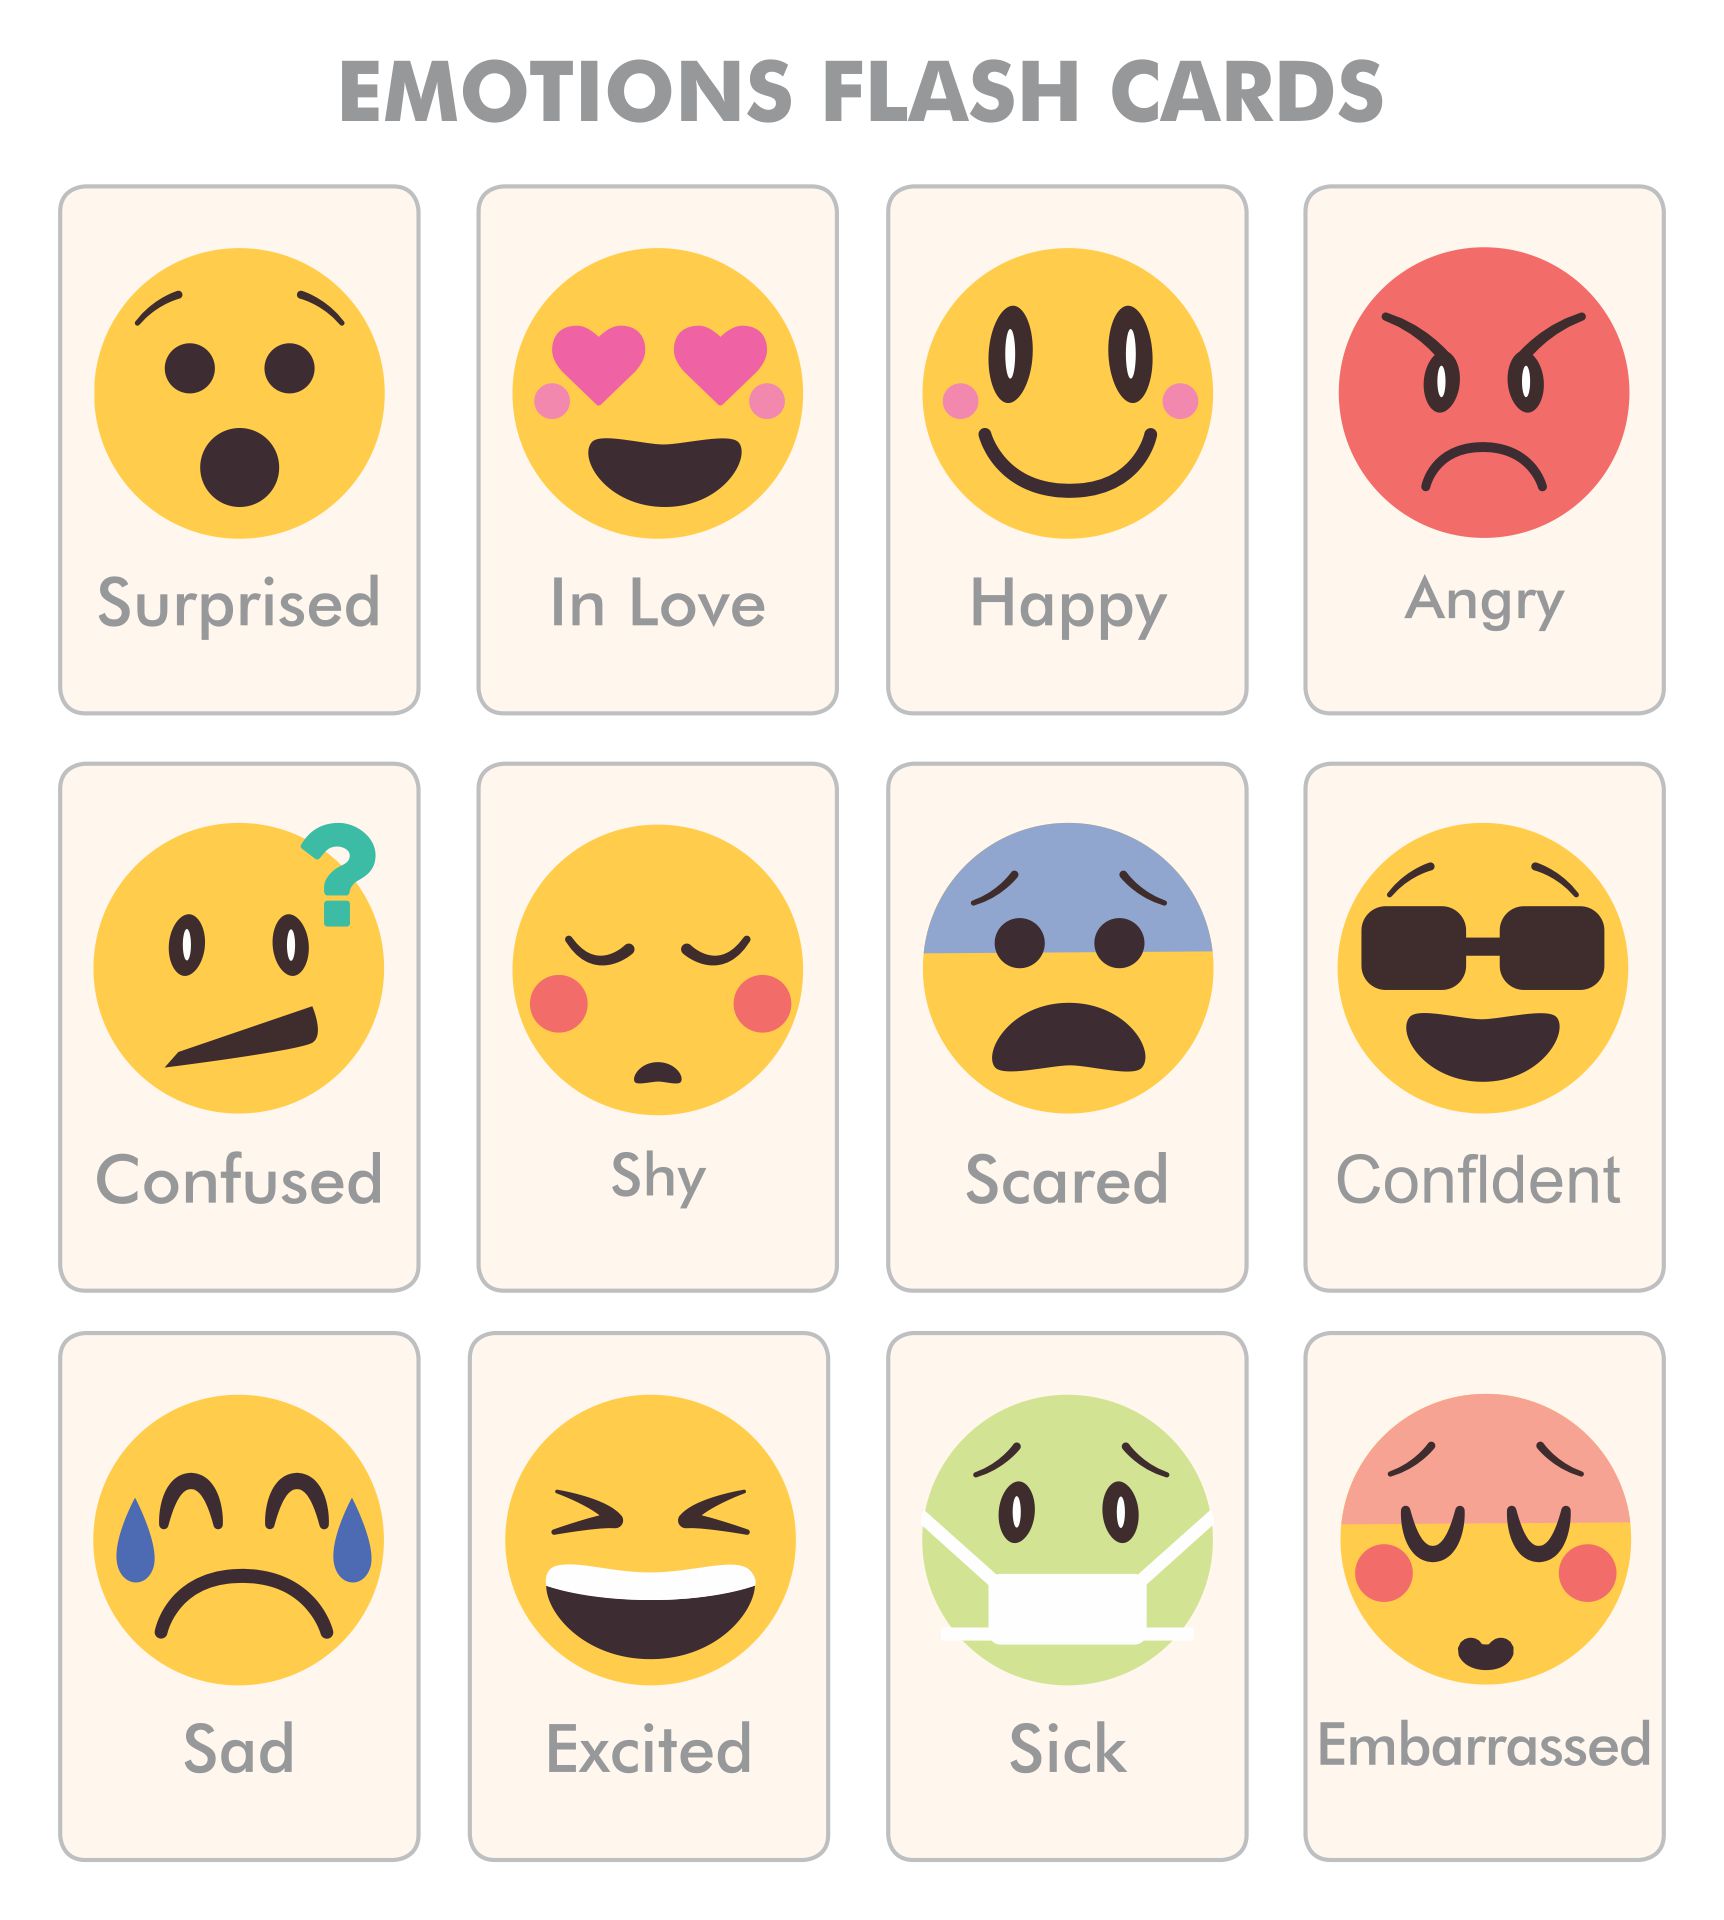 7 Best Images of Printable Emotion Cards Free Printable Emotion Flash